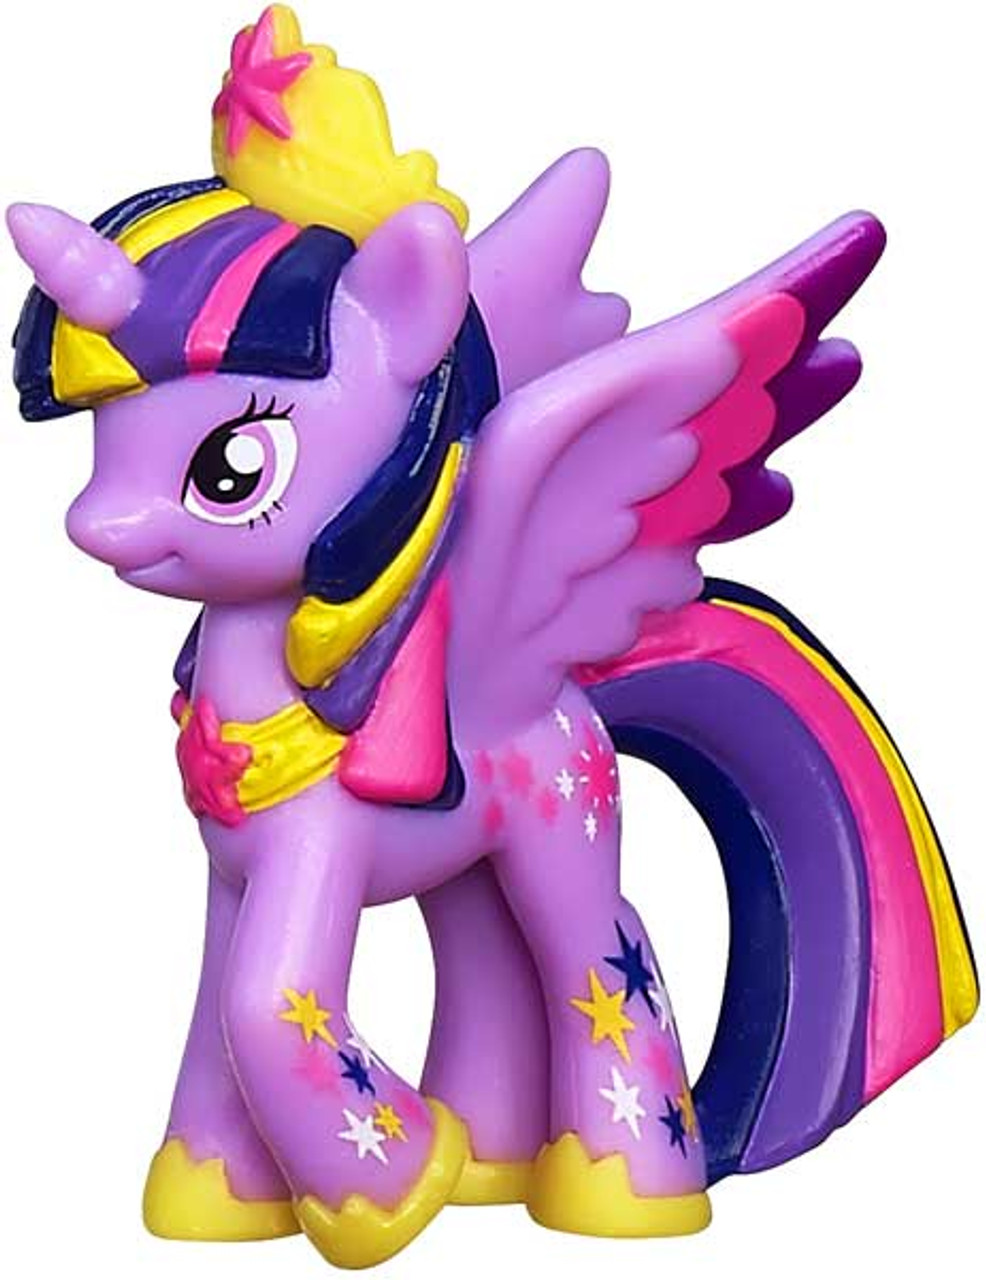 Лошадки литл пони. My little Pony принцесса Твайлайт Спаркл. Принцесса Твайлайт Спаркл игрушка. Принцесса Твайлайт магия. My little Pony игрушки 2014 Princess Twilight Sparkle.